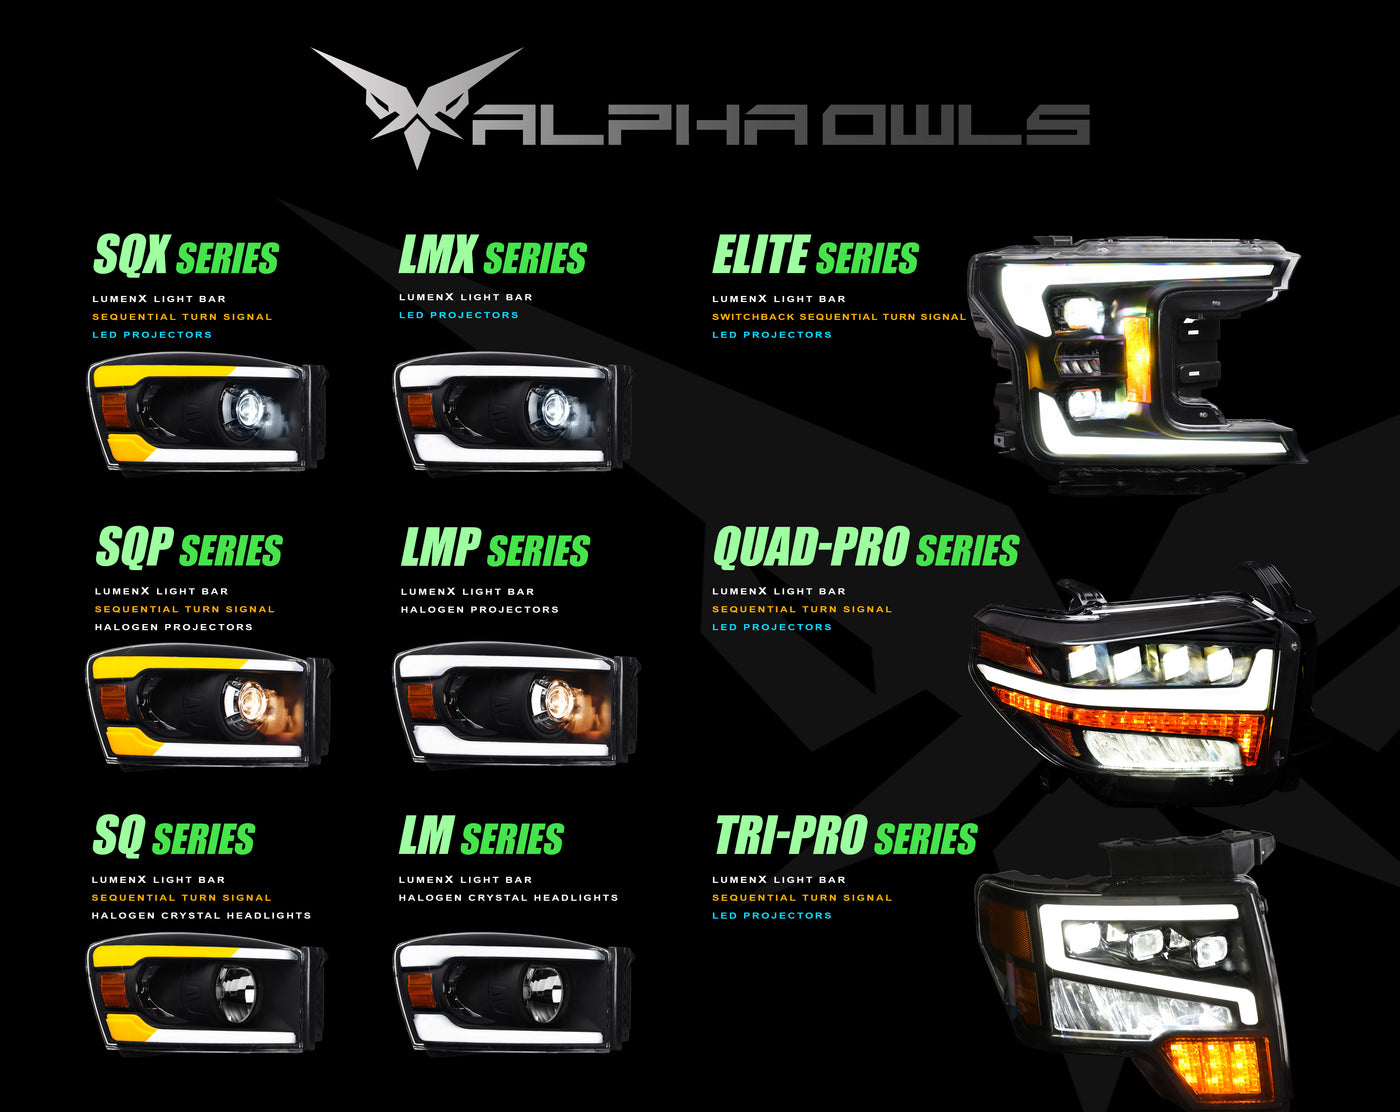 Alpha Owls Headlights, Alpha Owls Chevy Headlights, Chevy 2006-2013 Headlights, Chevy Impala Headlights, Headlights, Chrome housing Headlights